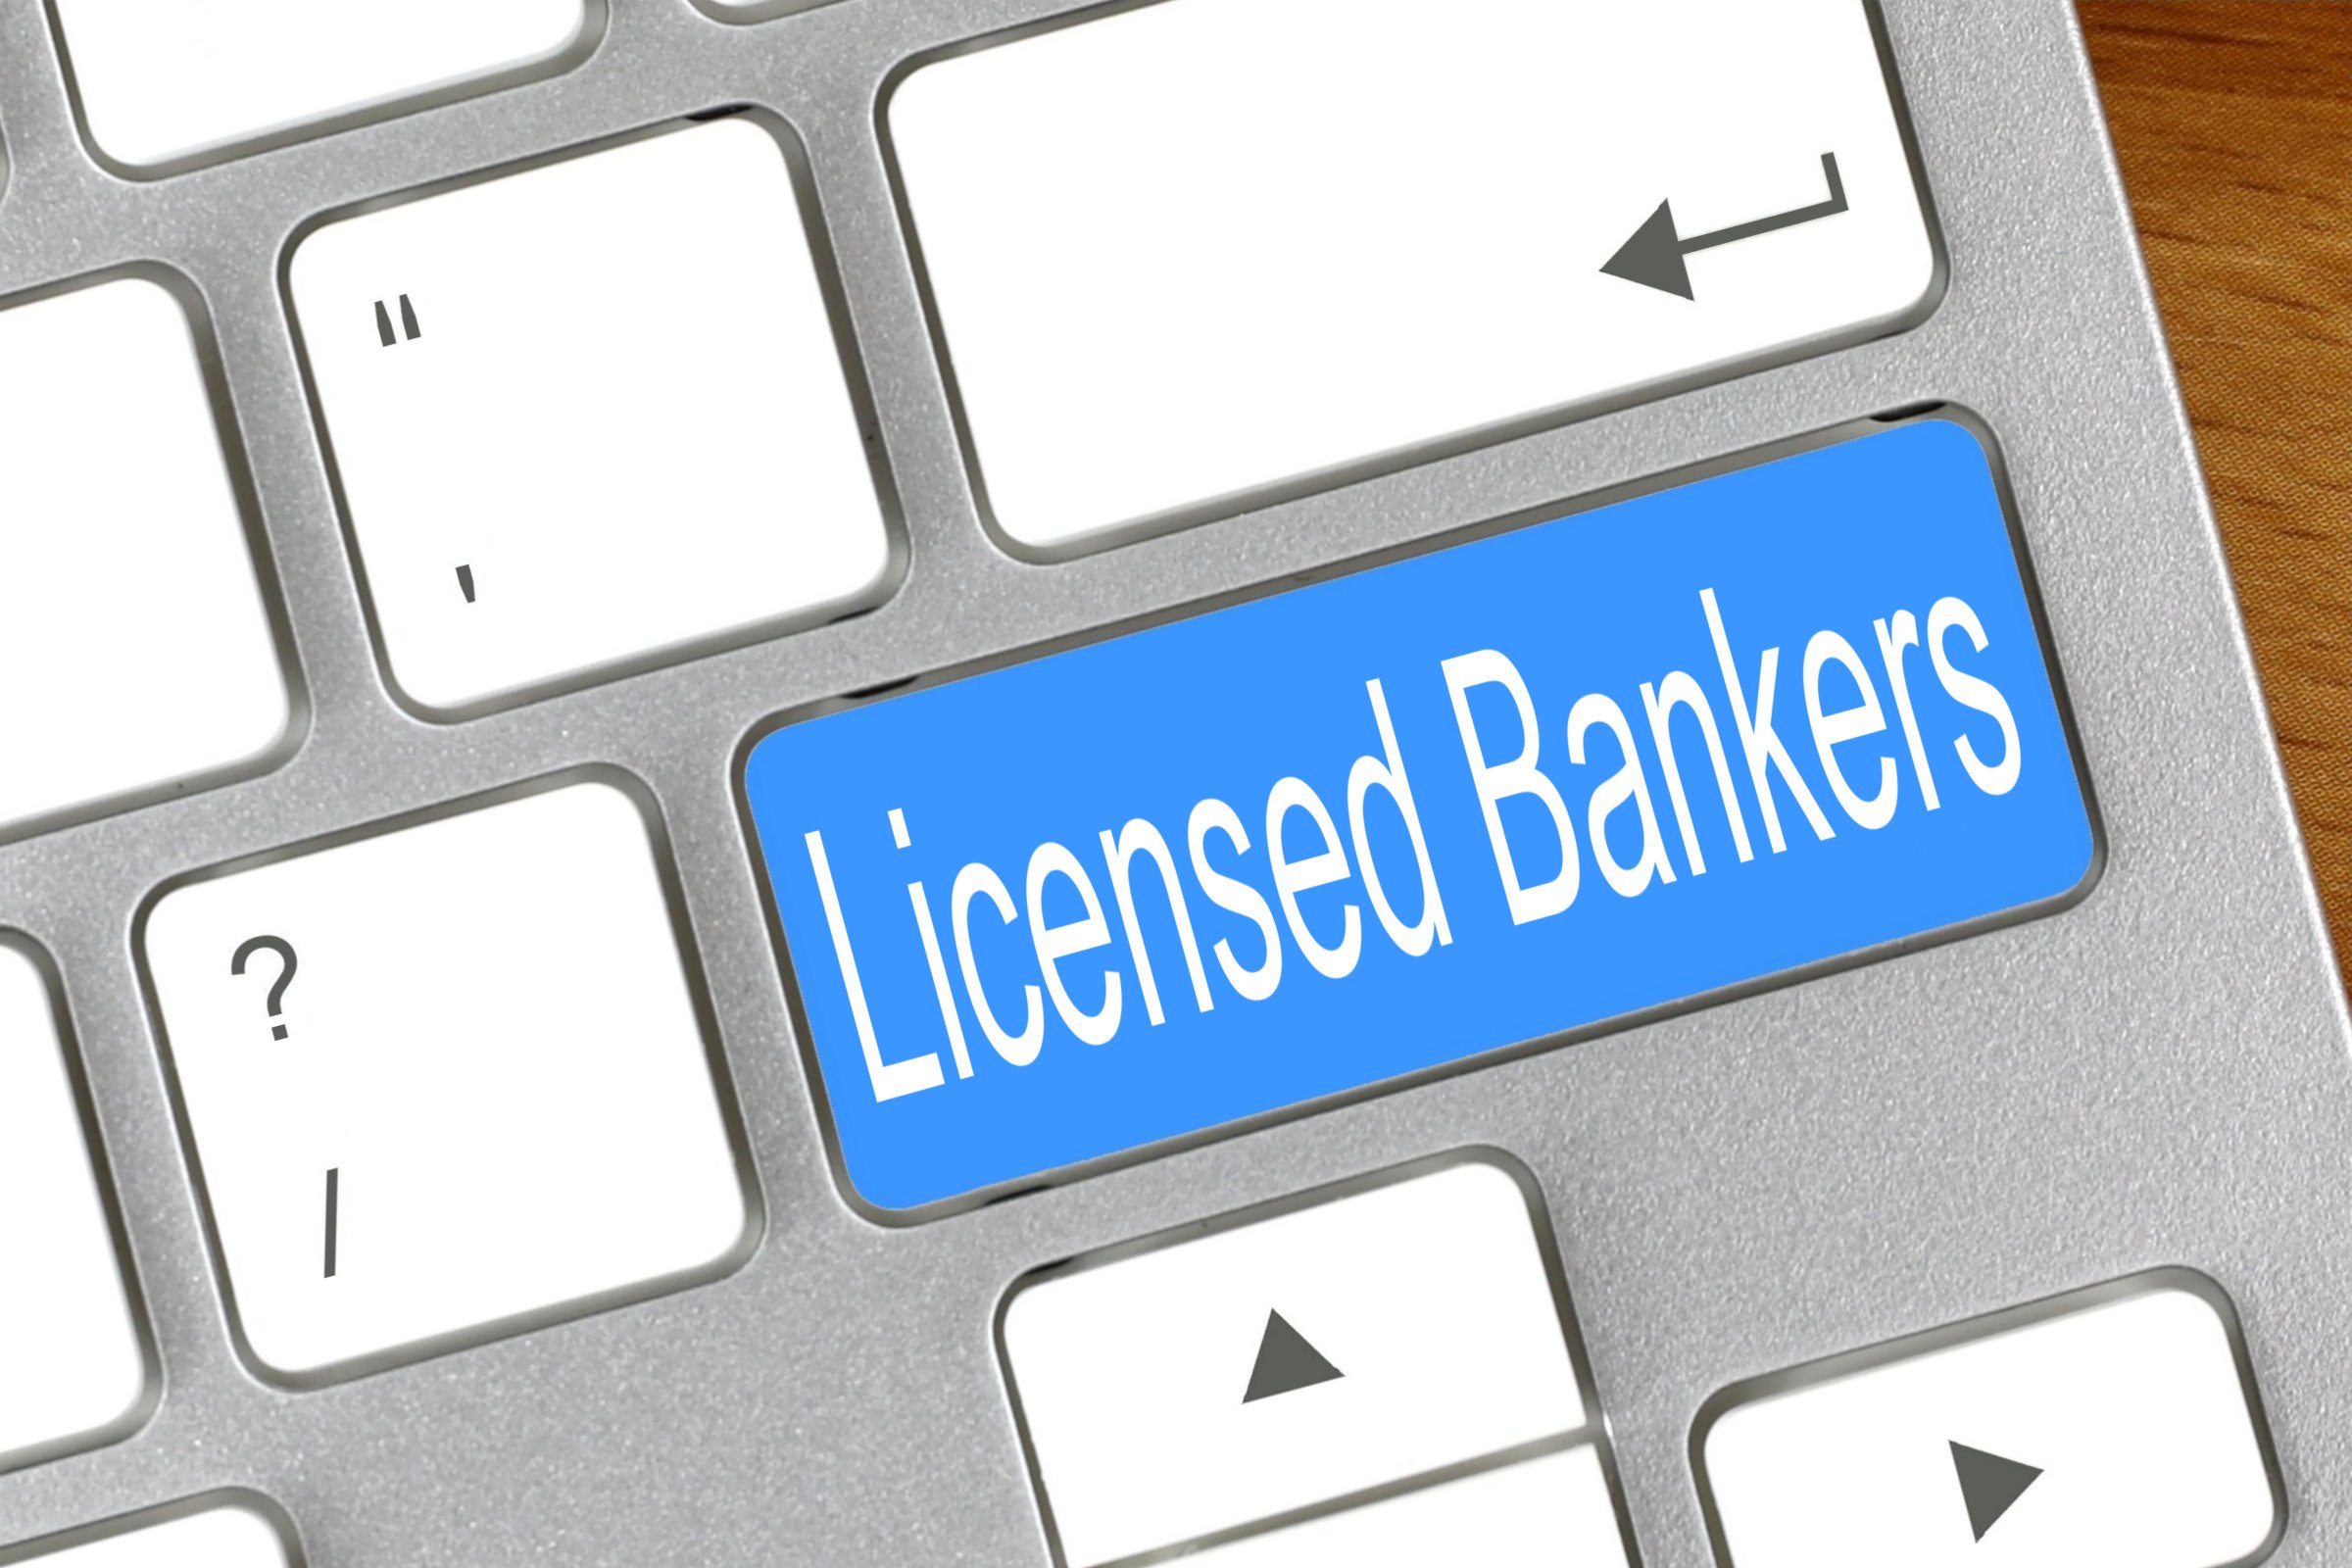 licensed bankers